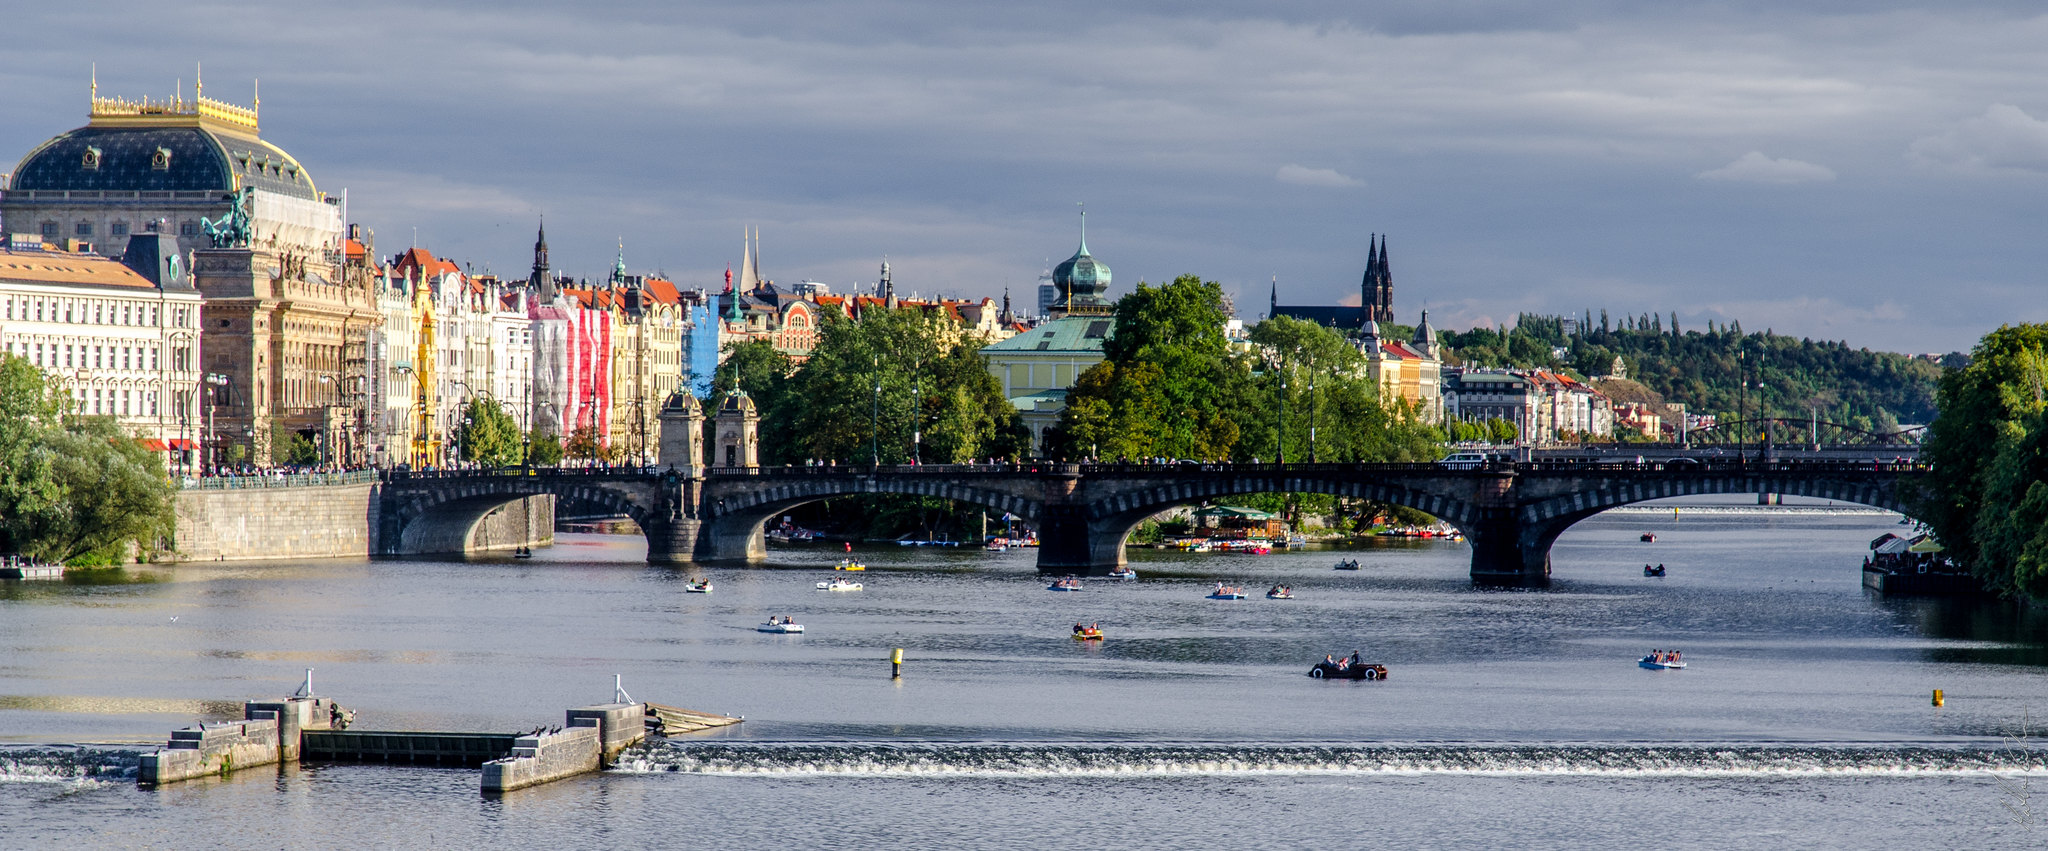 PragueVienneBudapest-Flickr-2